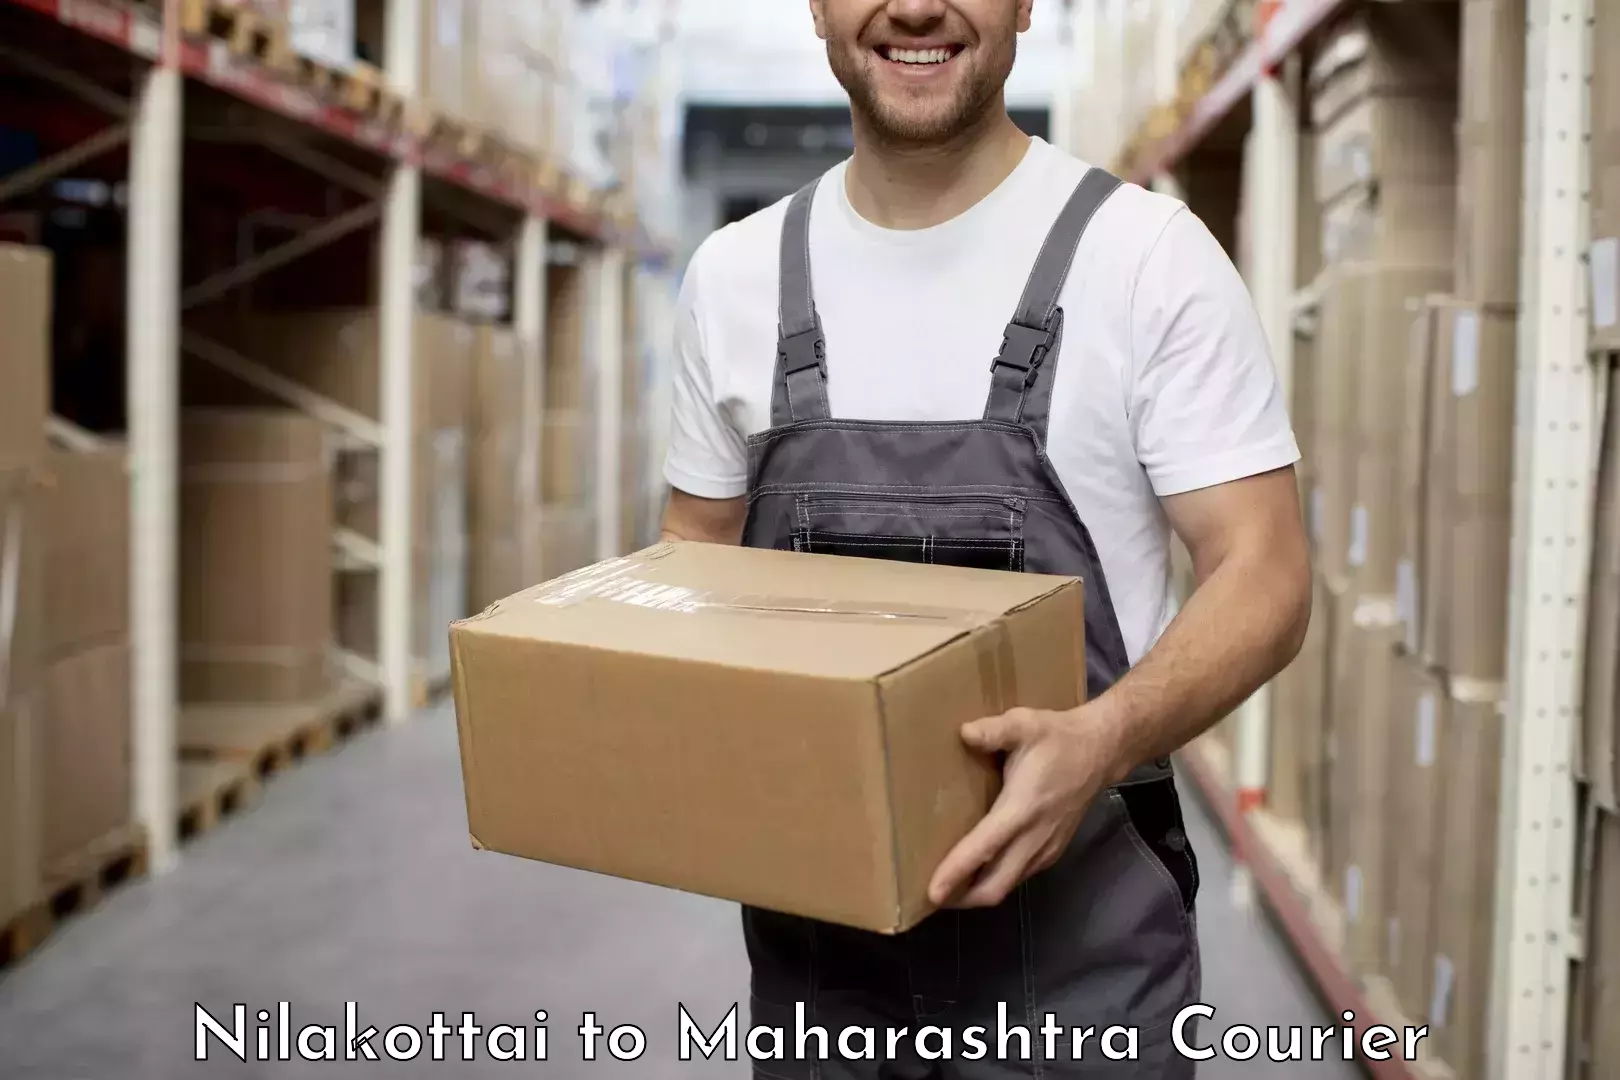 Logistics service provider Nilakottai to Mahabaleshwar